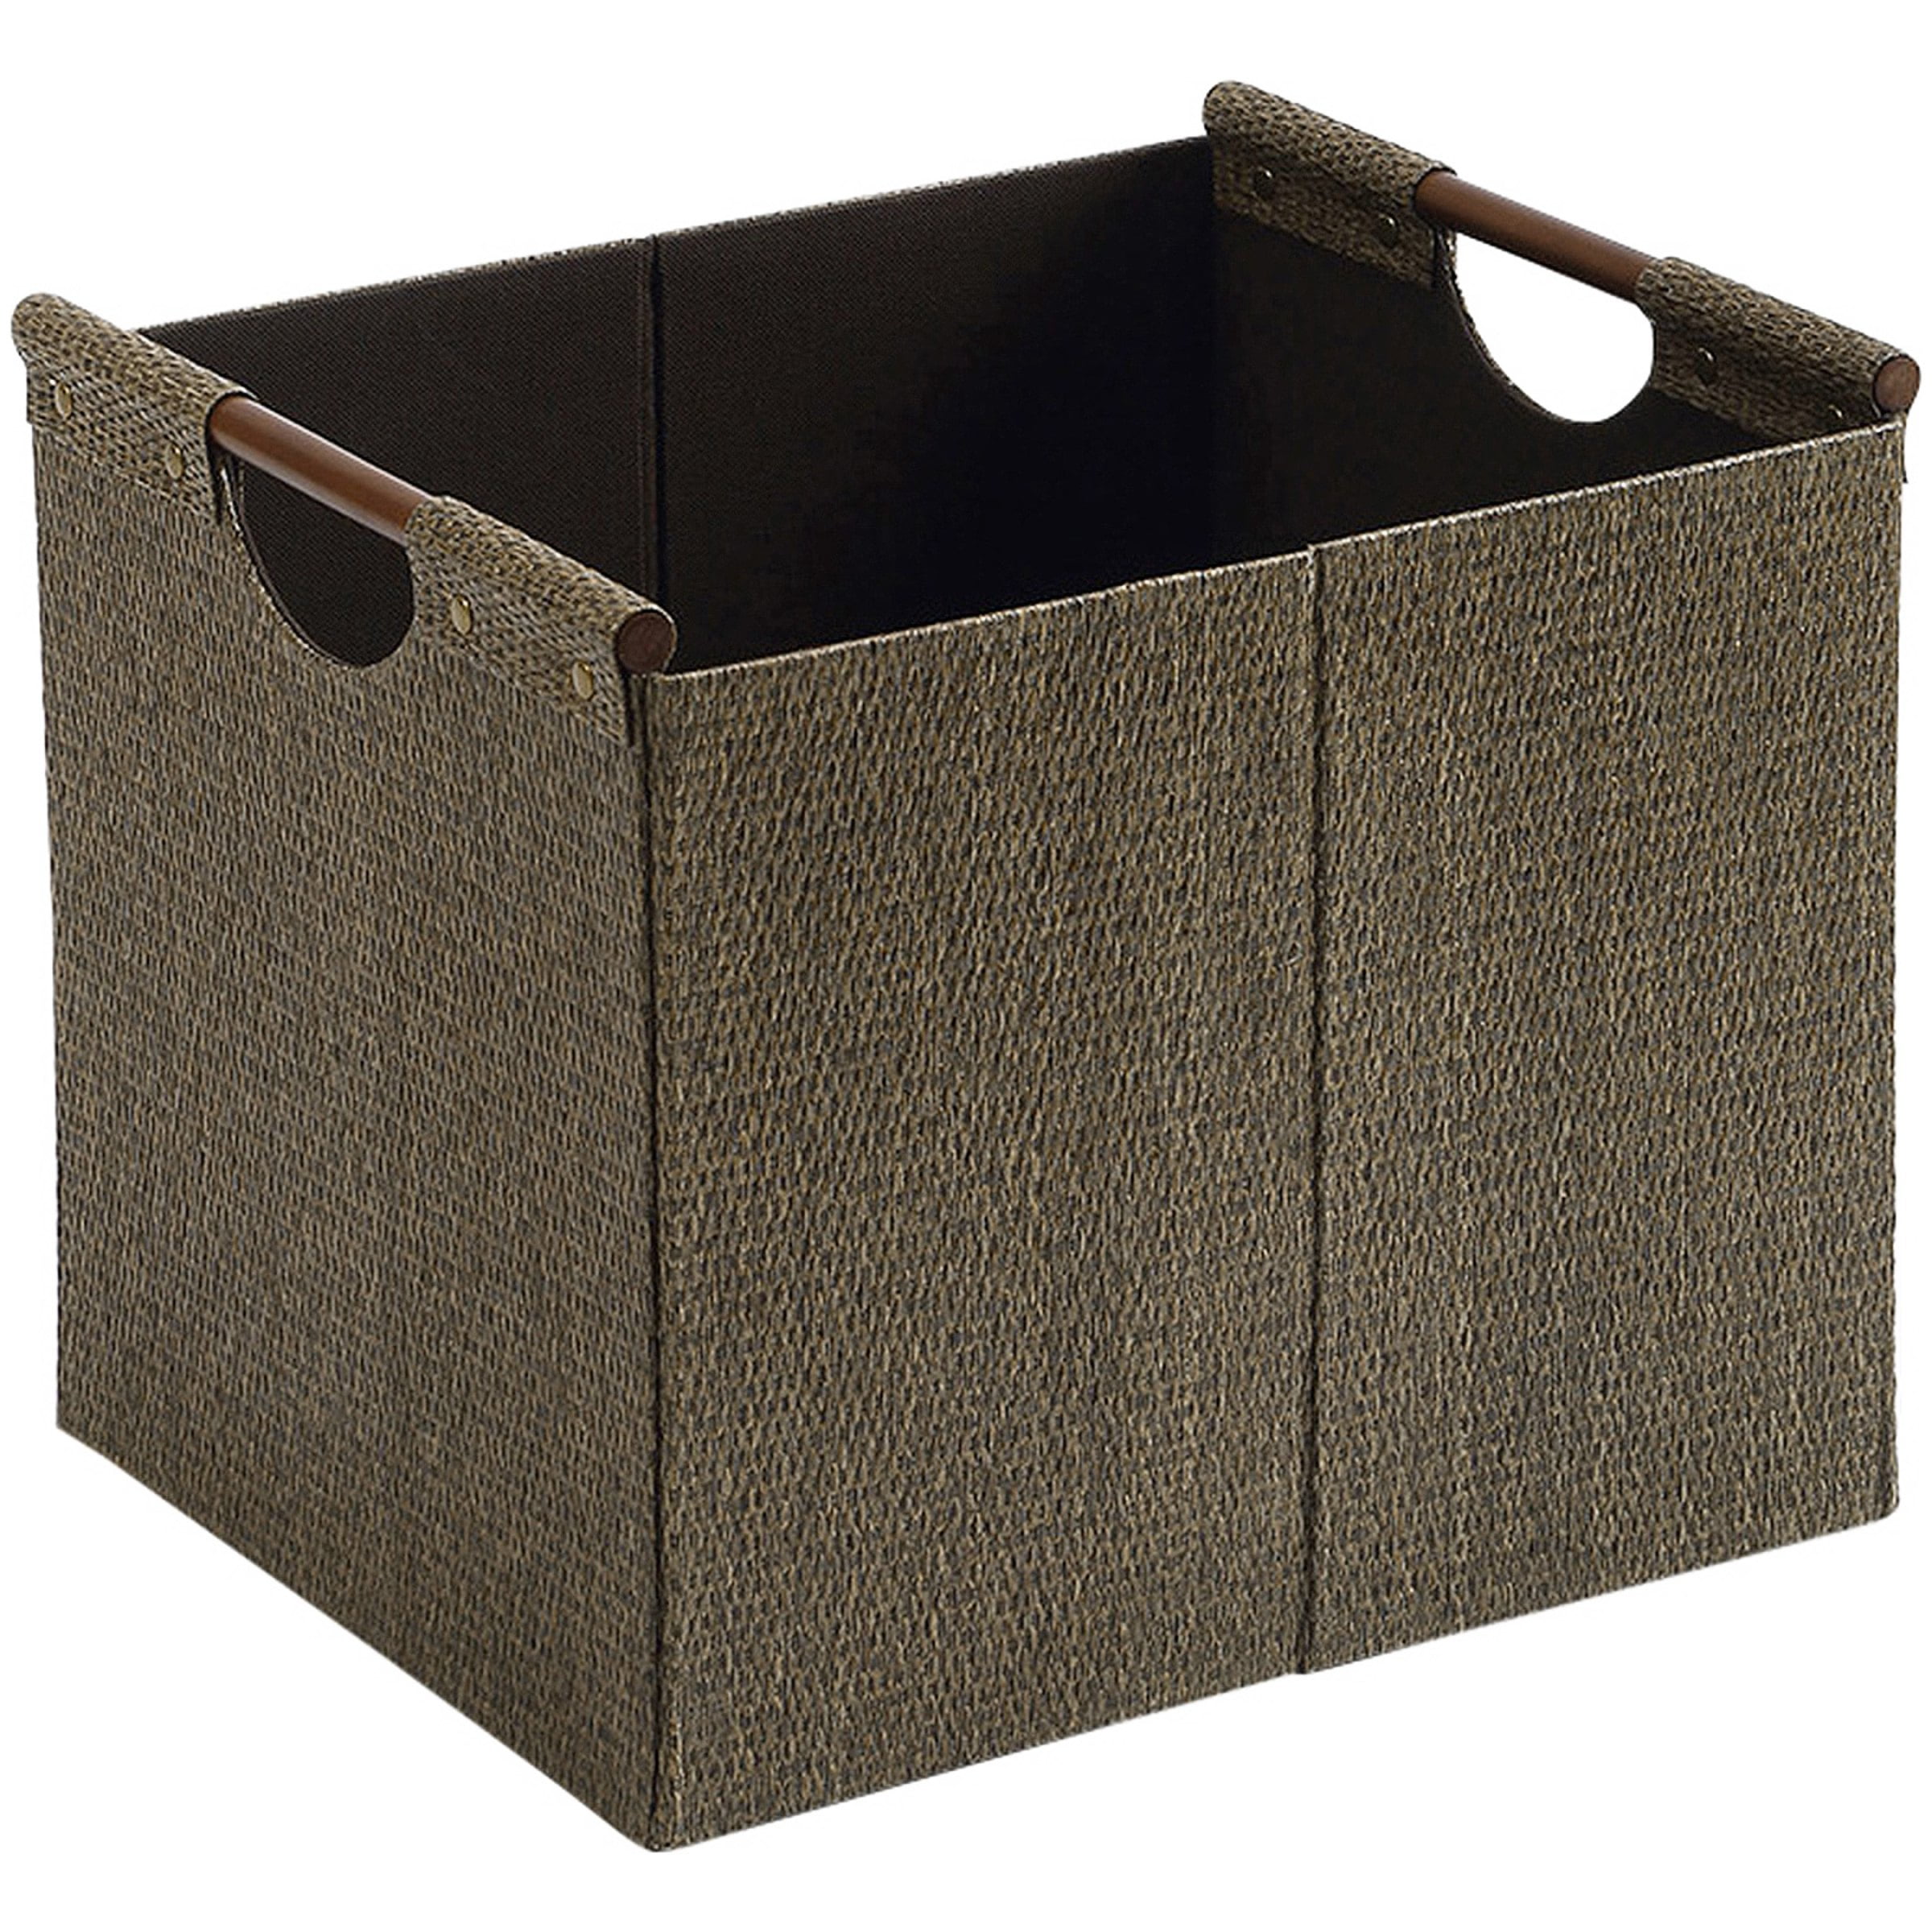 12" Chocolate Brown Durable Woven Nylon Basket Home Storage Bin Tote w/ Handles 